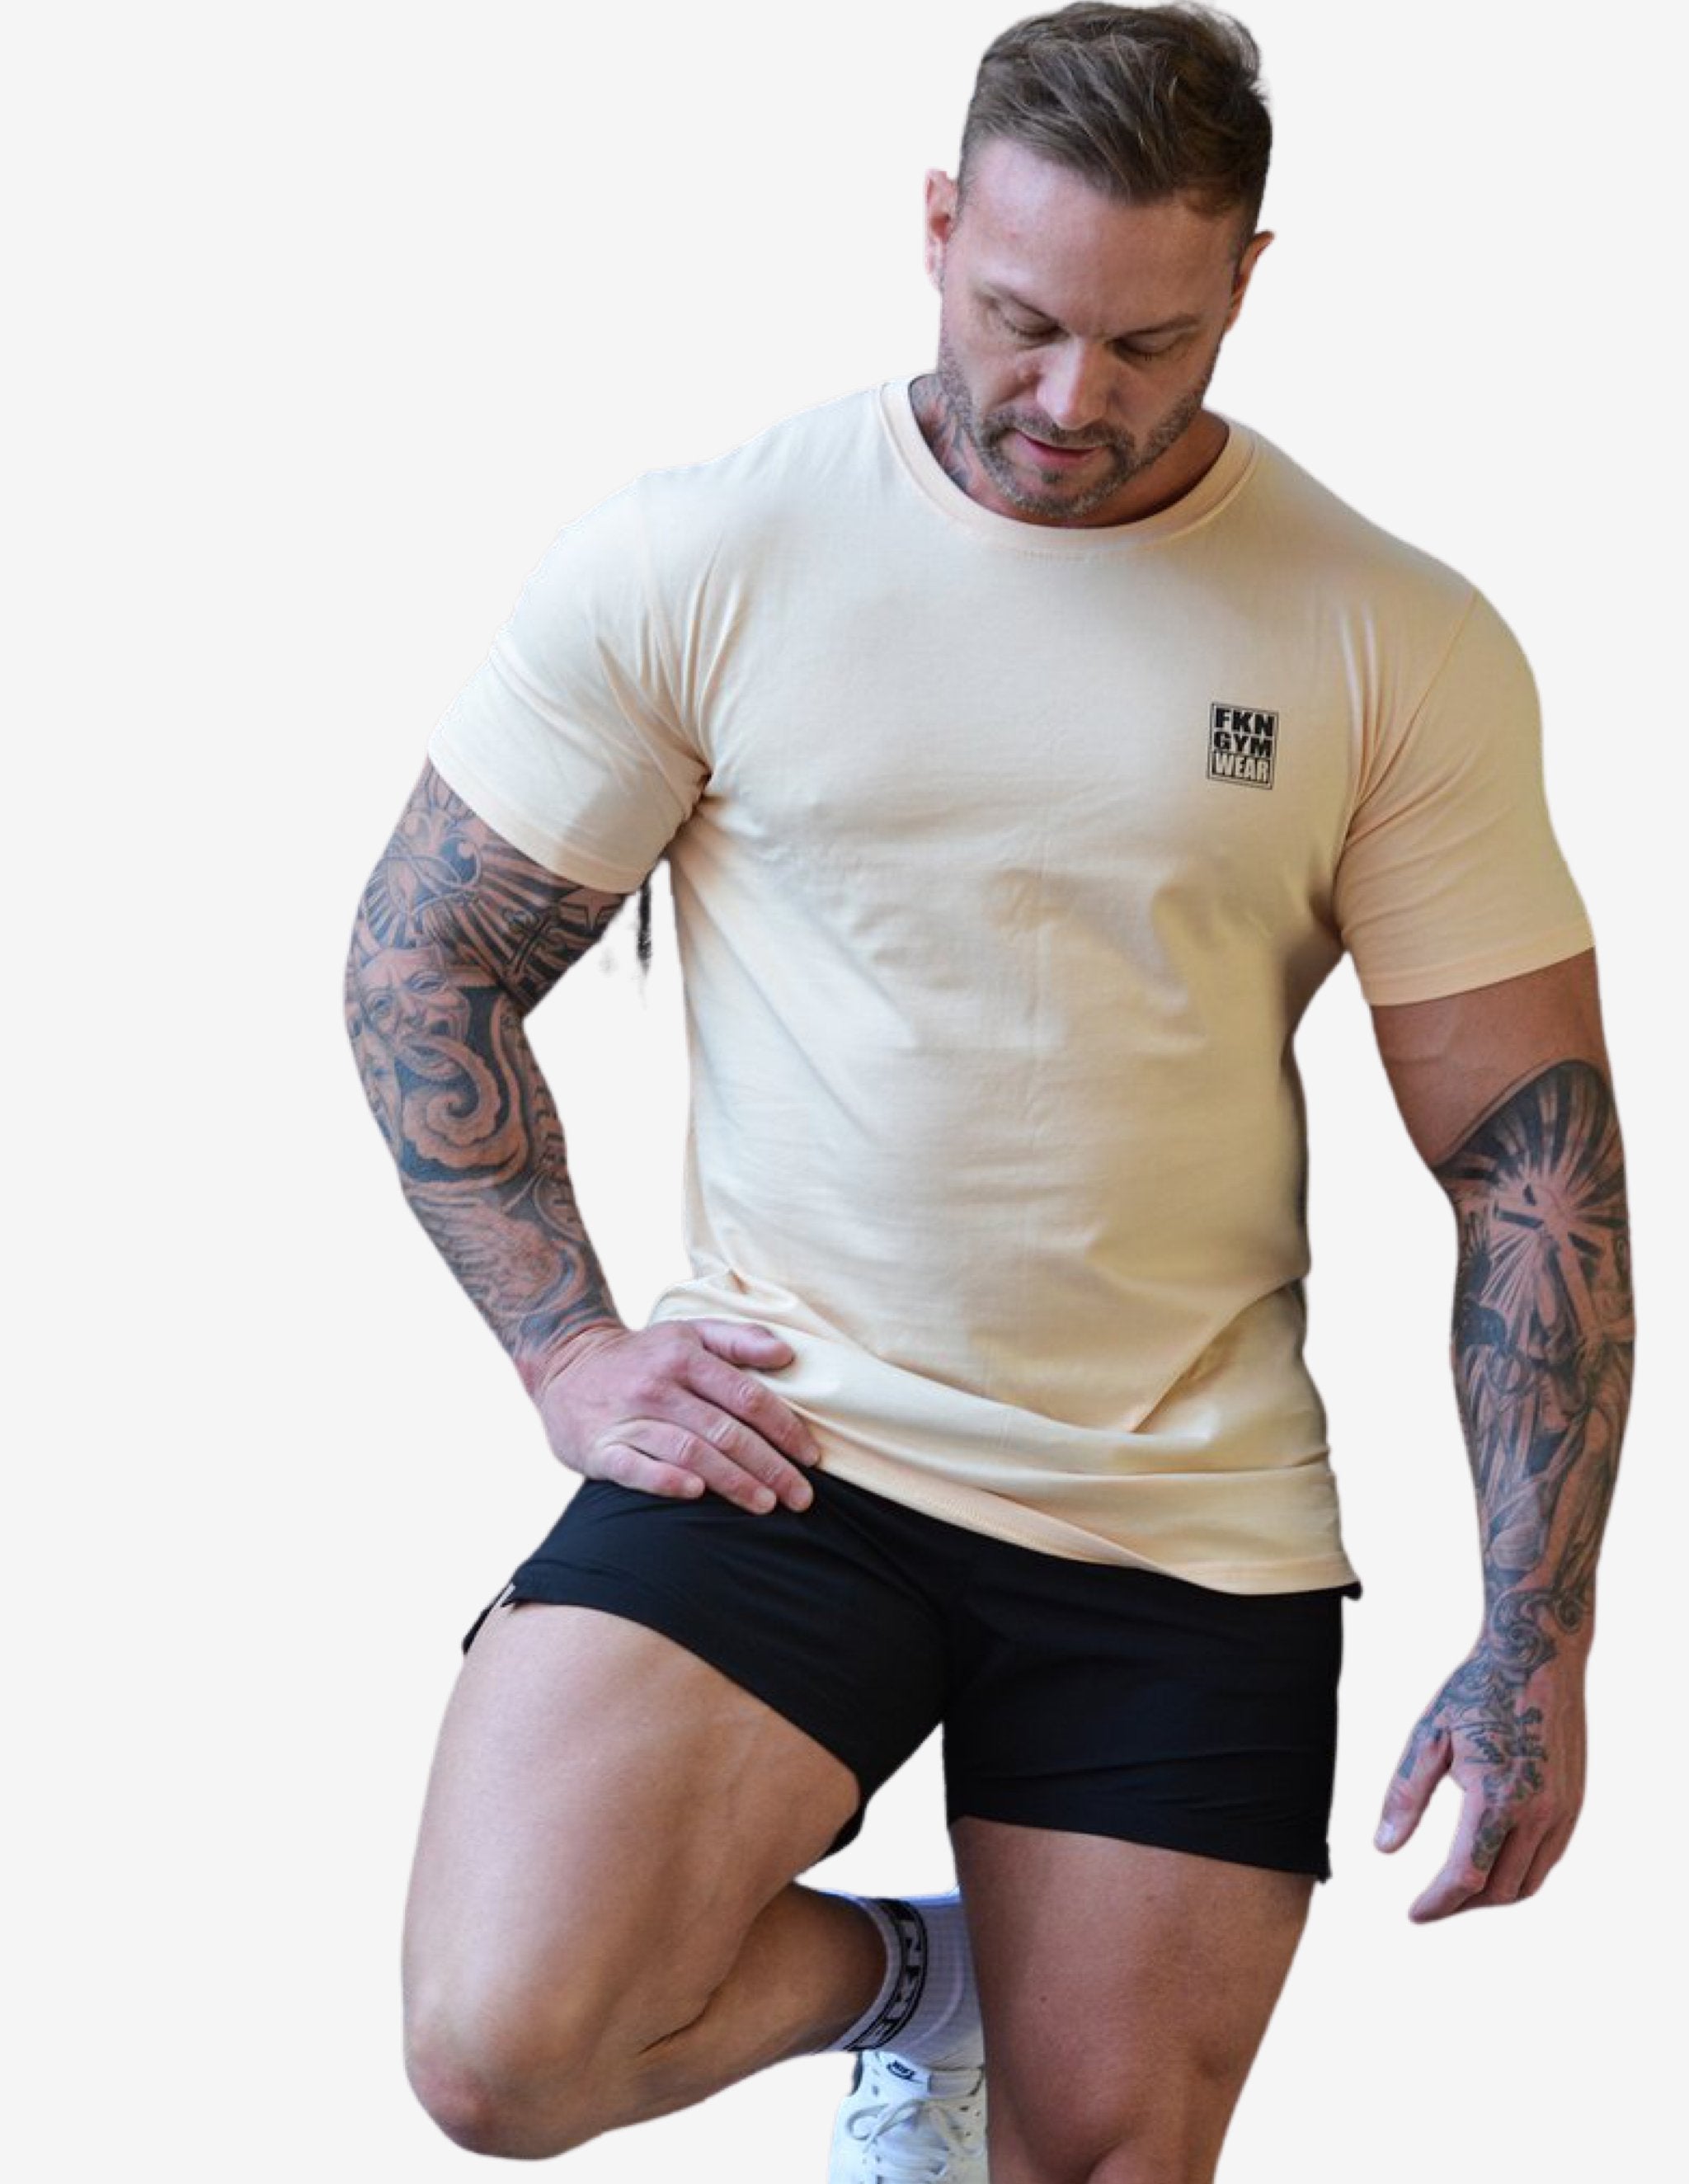 Men's Gym T-Shirt-T-shirt Man-FKN Gym Wear-Guru Muscle